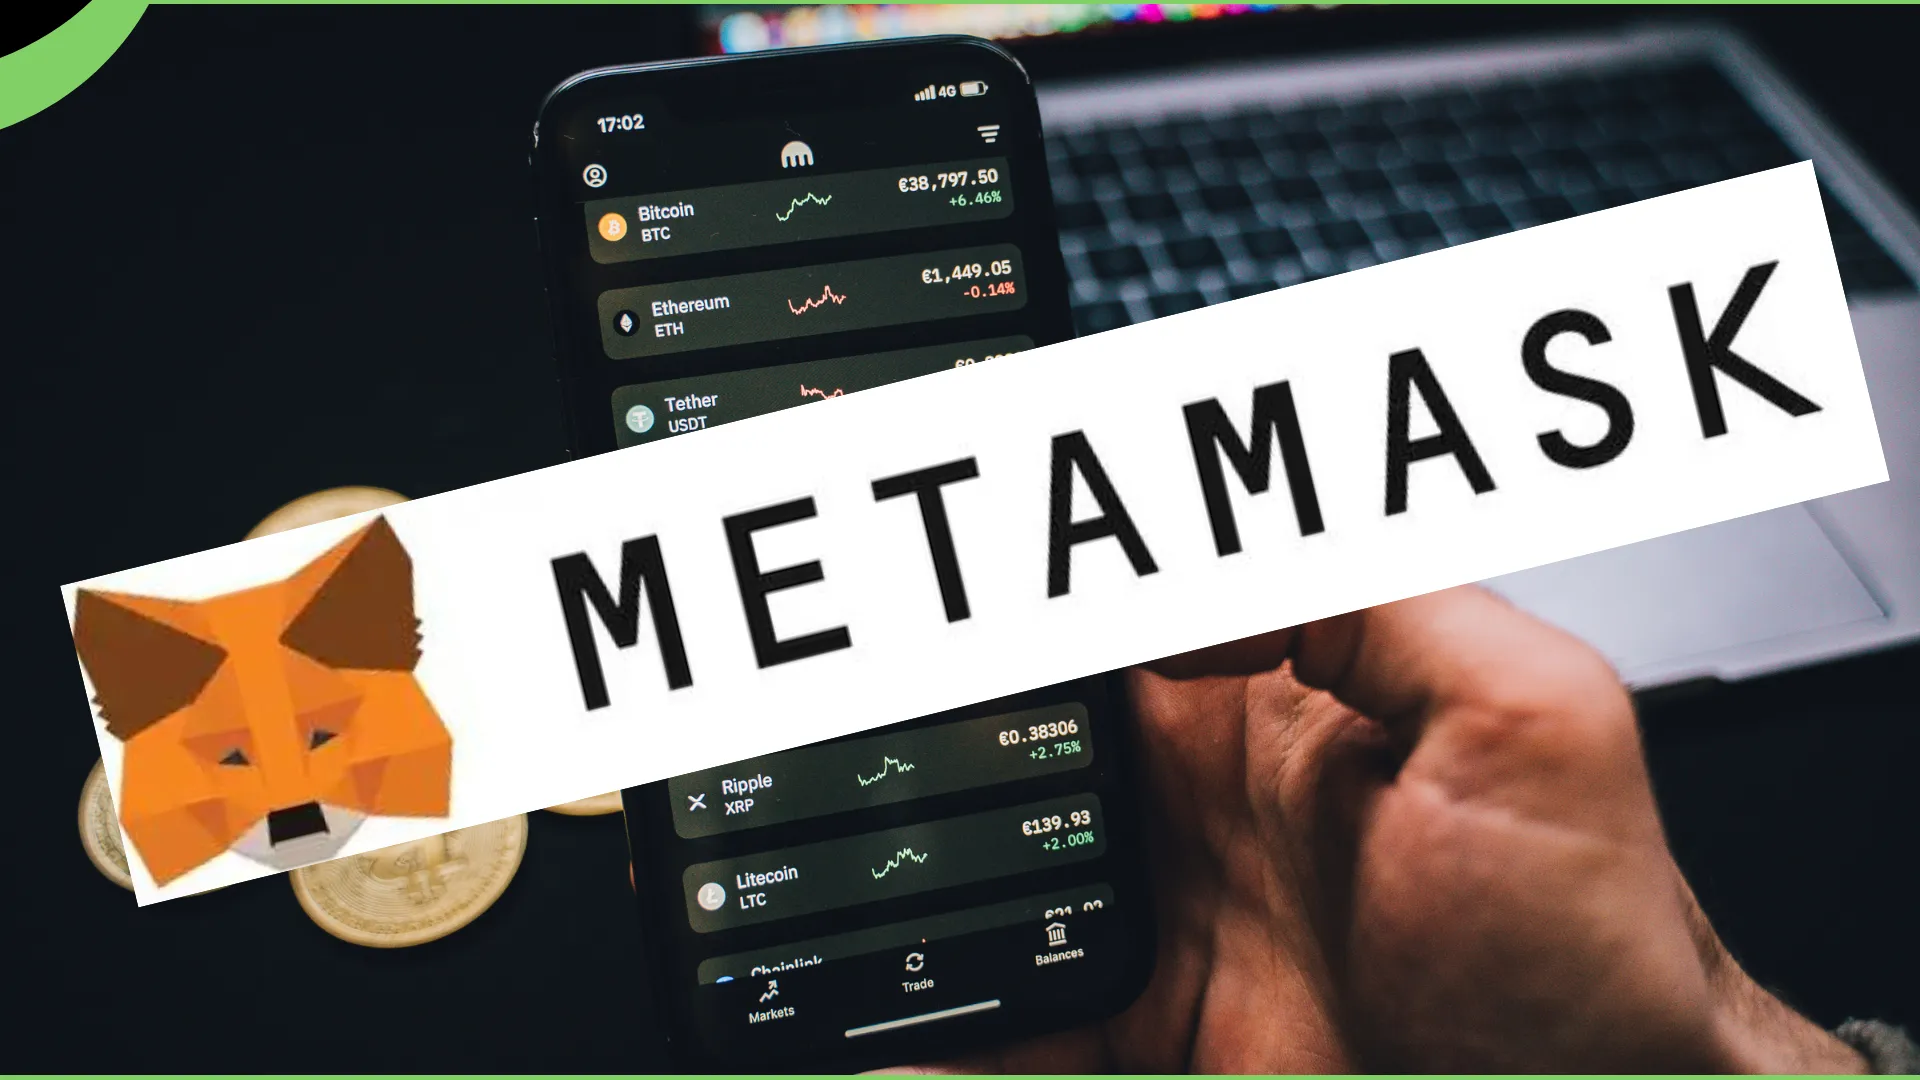 MetaMask se integra con Apple Pay